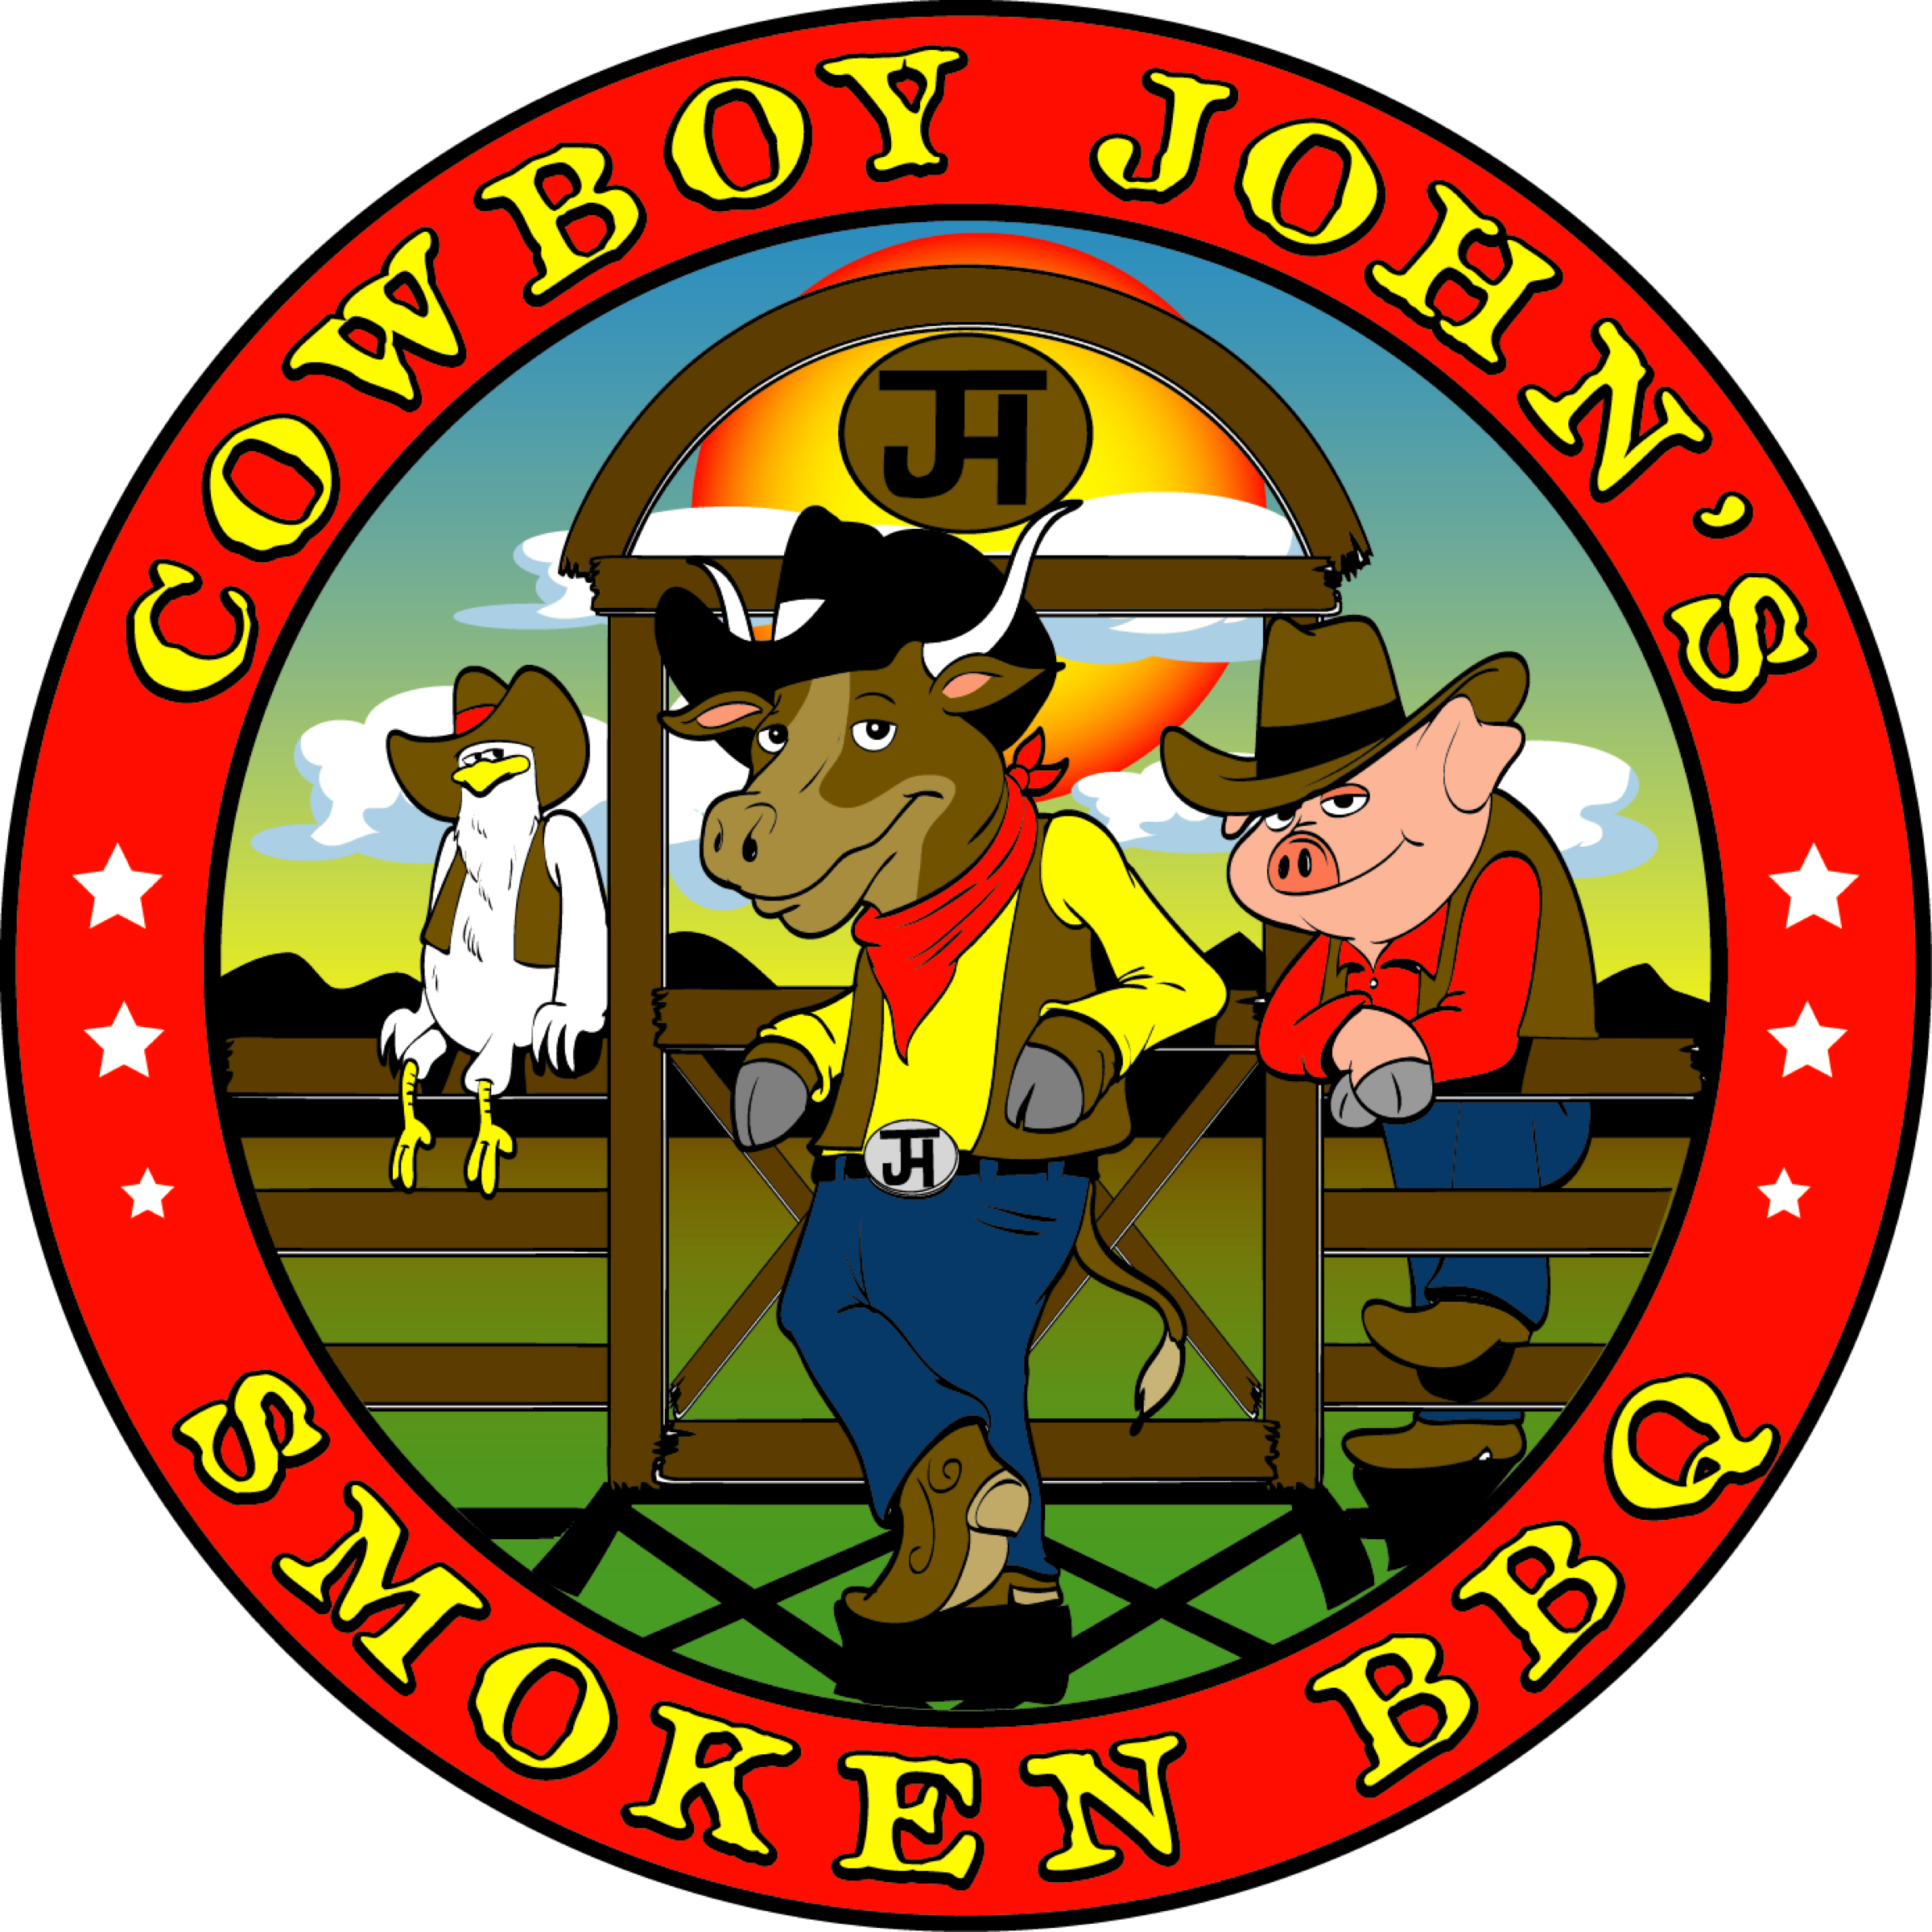 Cowboy Johns Smokin Bbq (2400x2400)